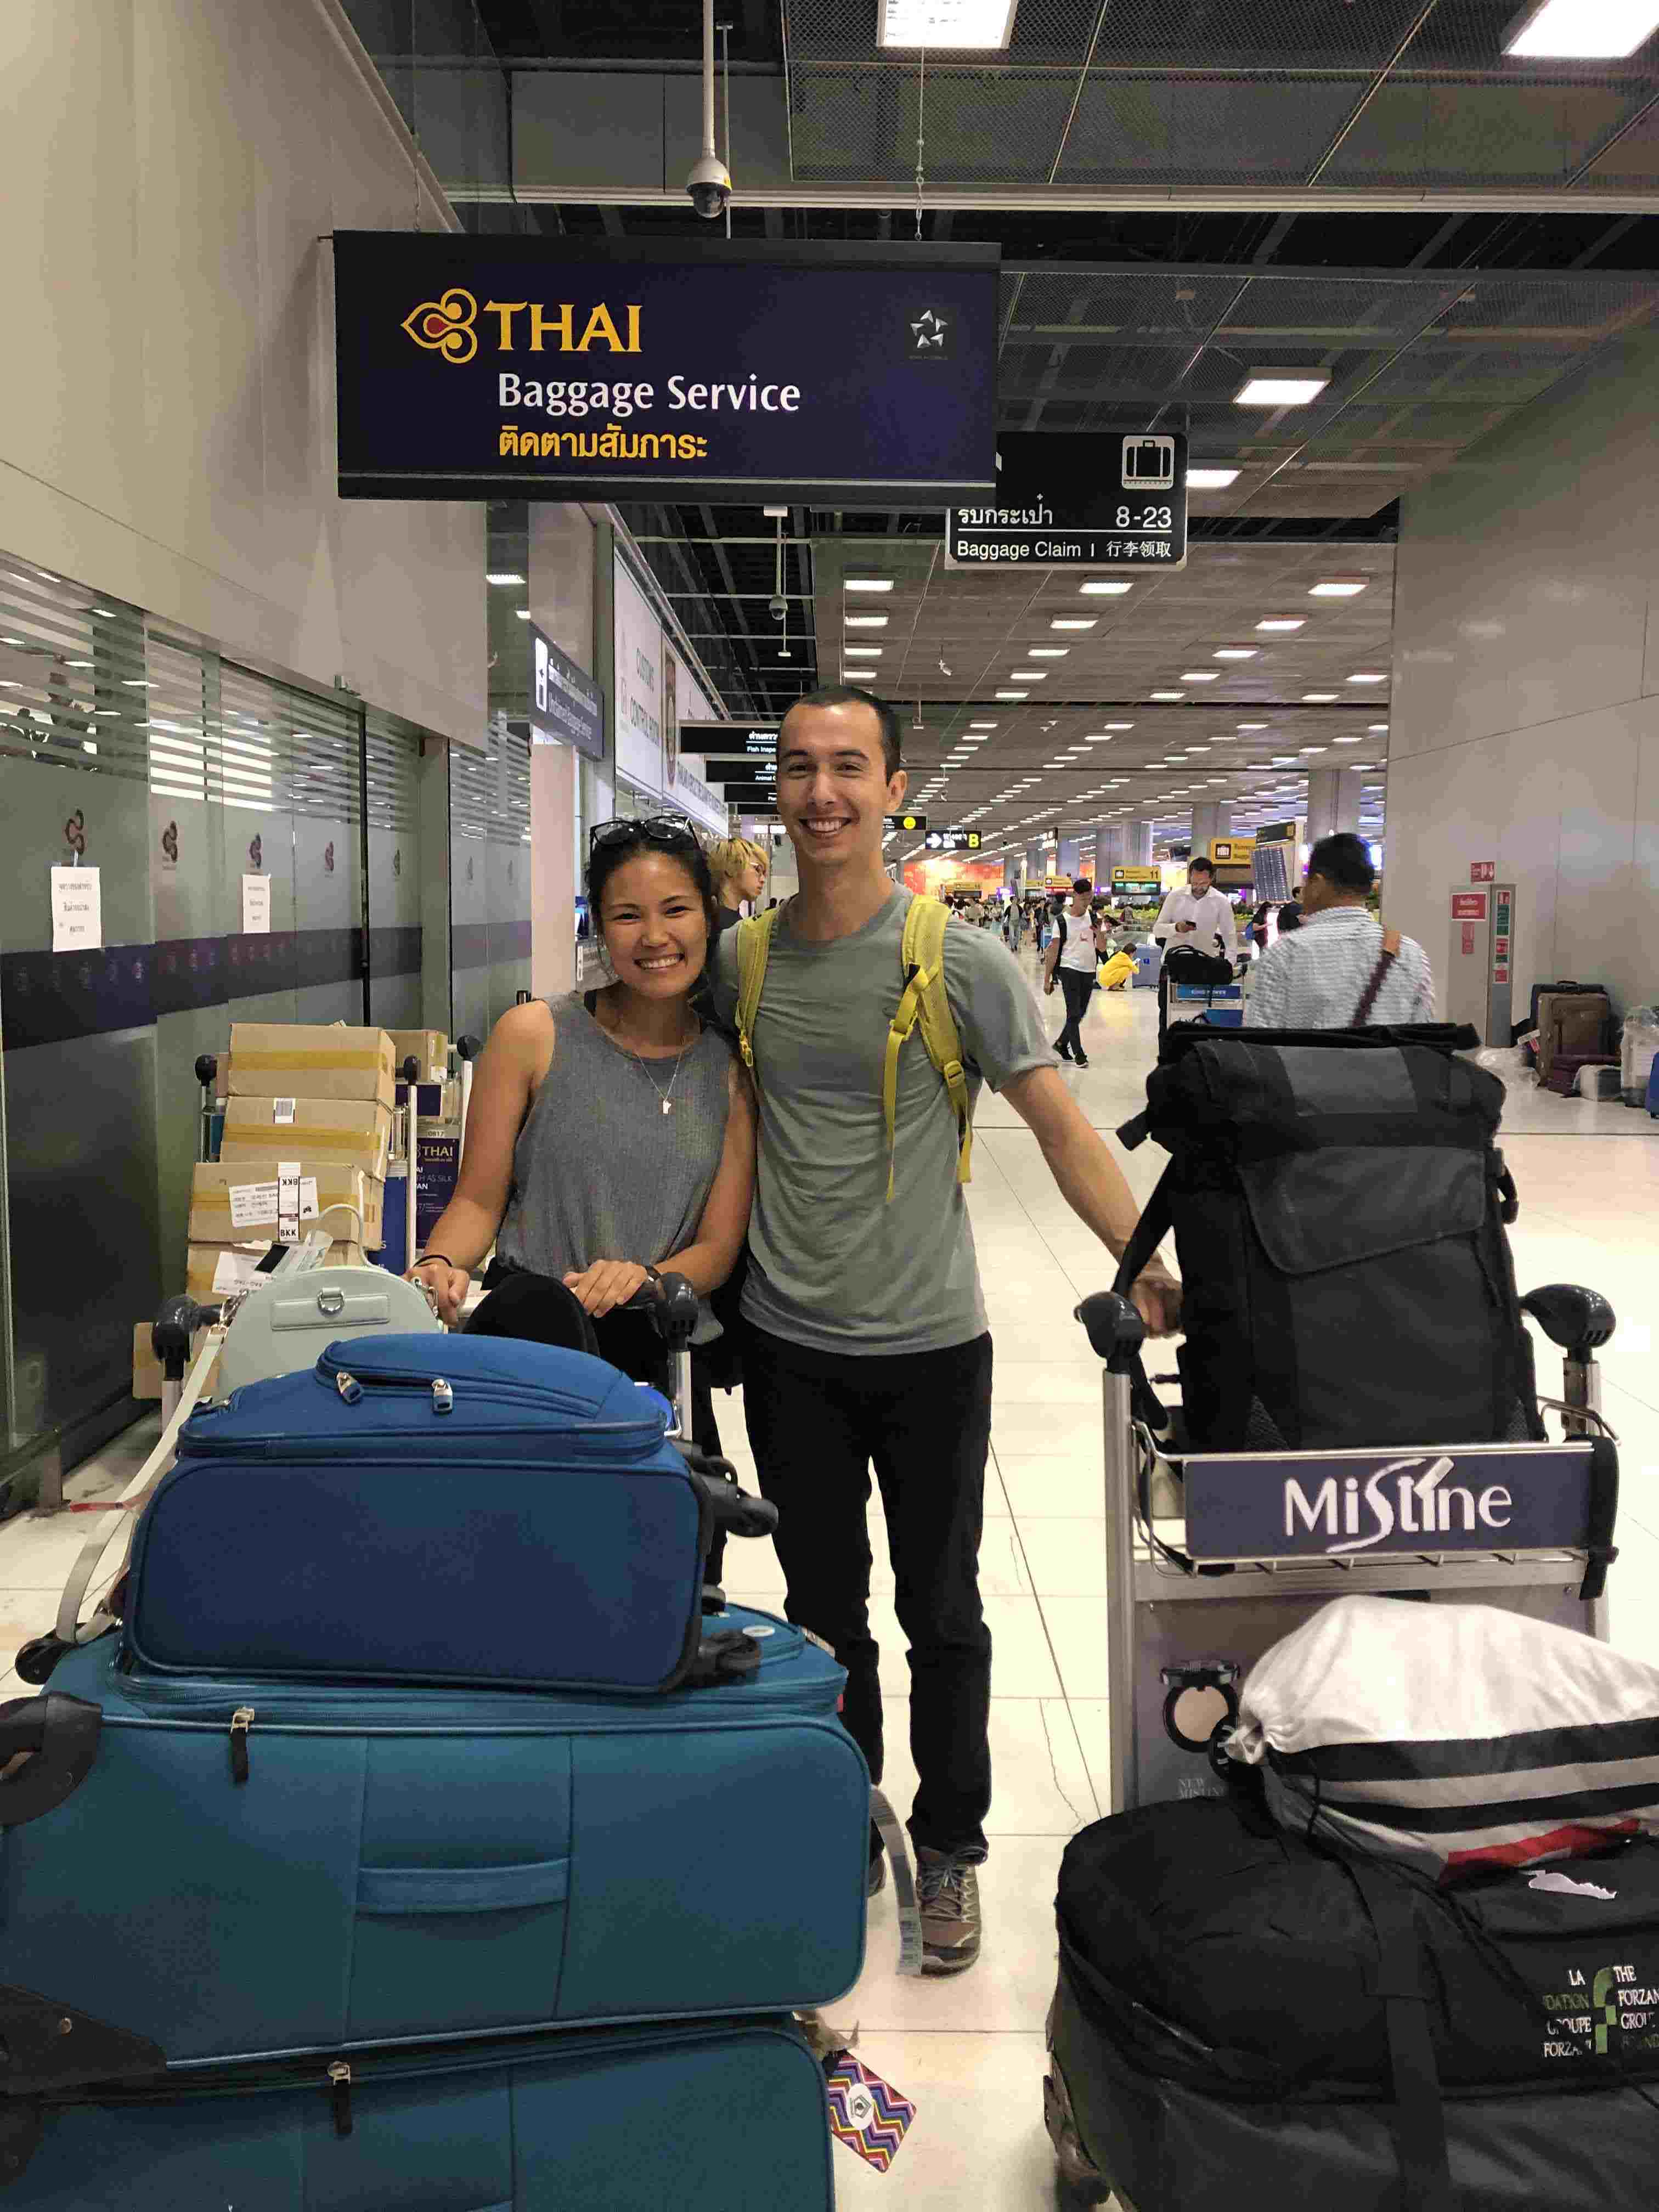 Us, shortly after landing in Bangkok